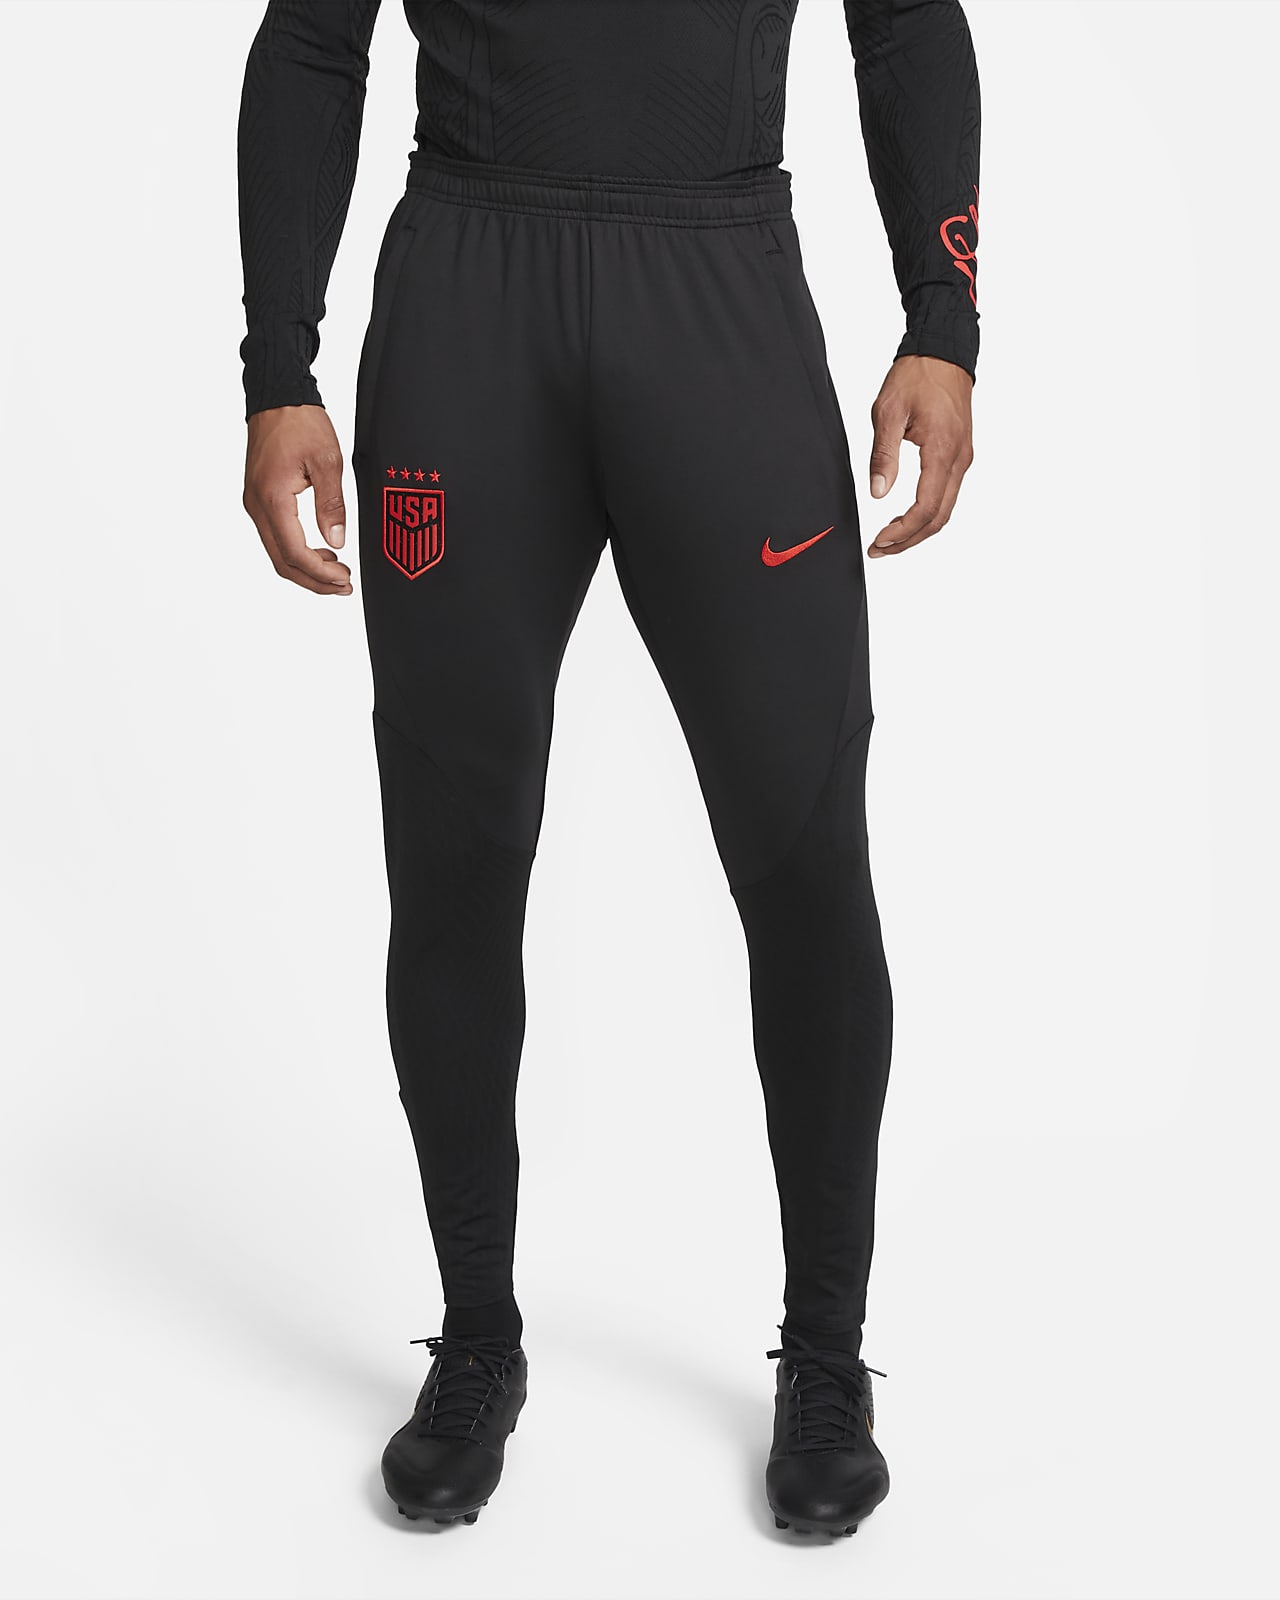 Nike Men's Woven Running Pants - Running Warehouse Europe